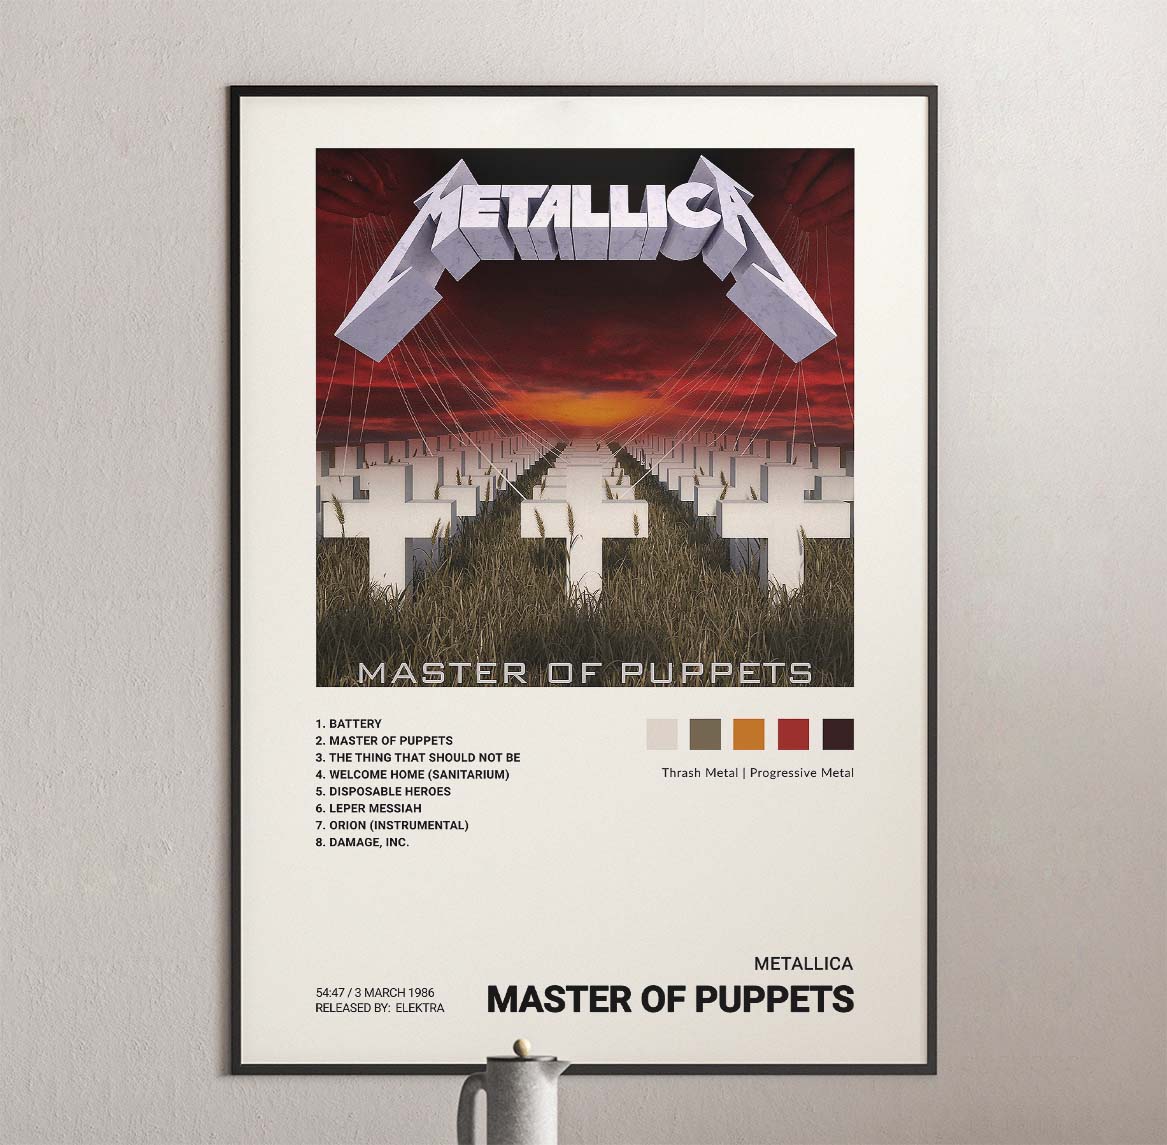 Metallica - Master of Puppets Album Cover Poster | Architeg Prints